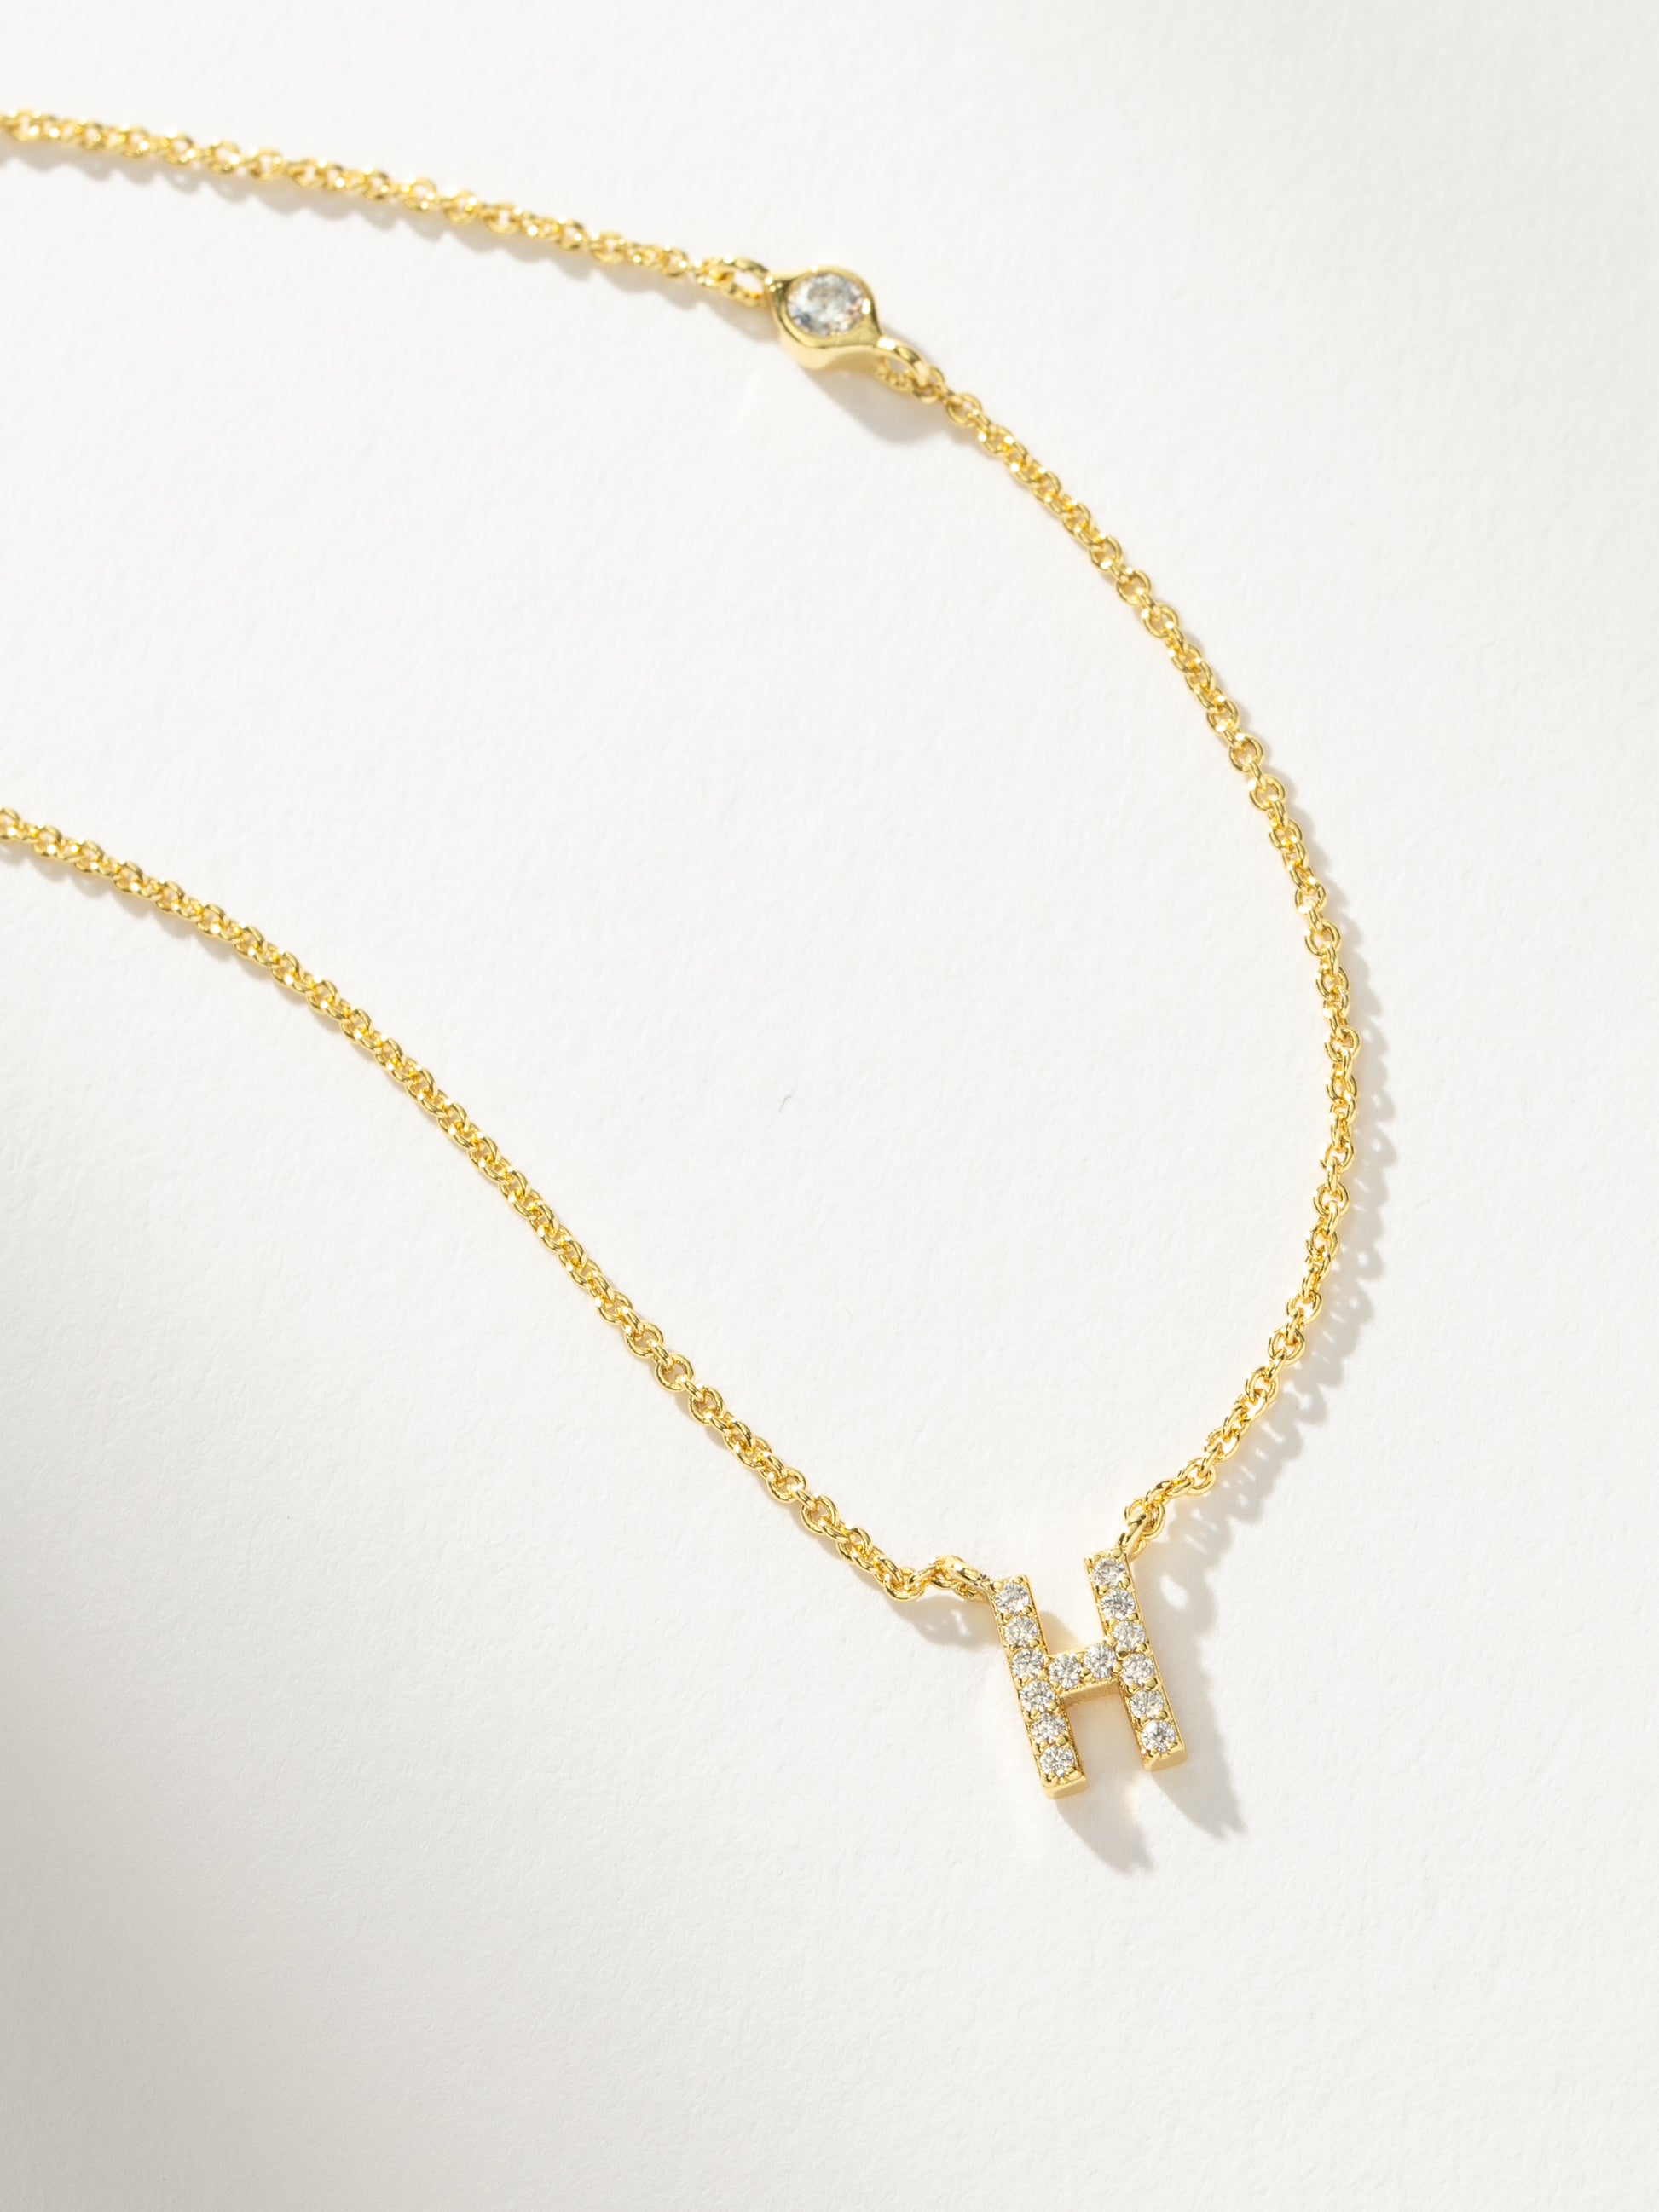 Pavé Initial Necklace | Gold H | Product Detail Image | Uncommon James